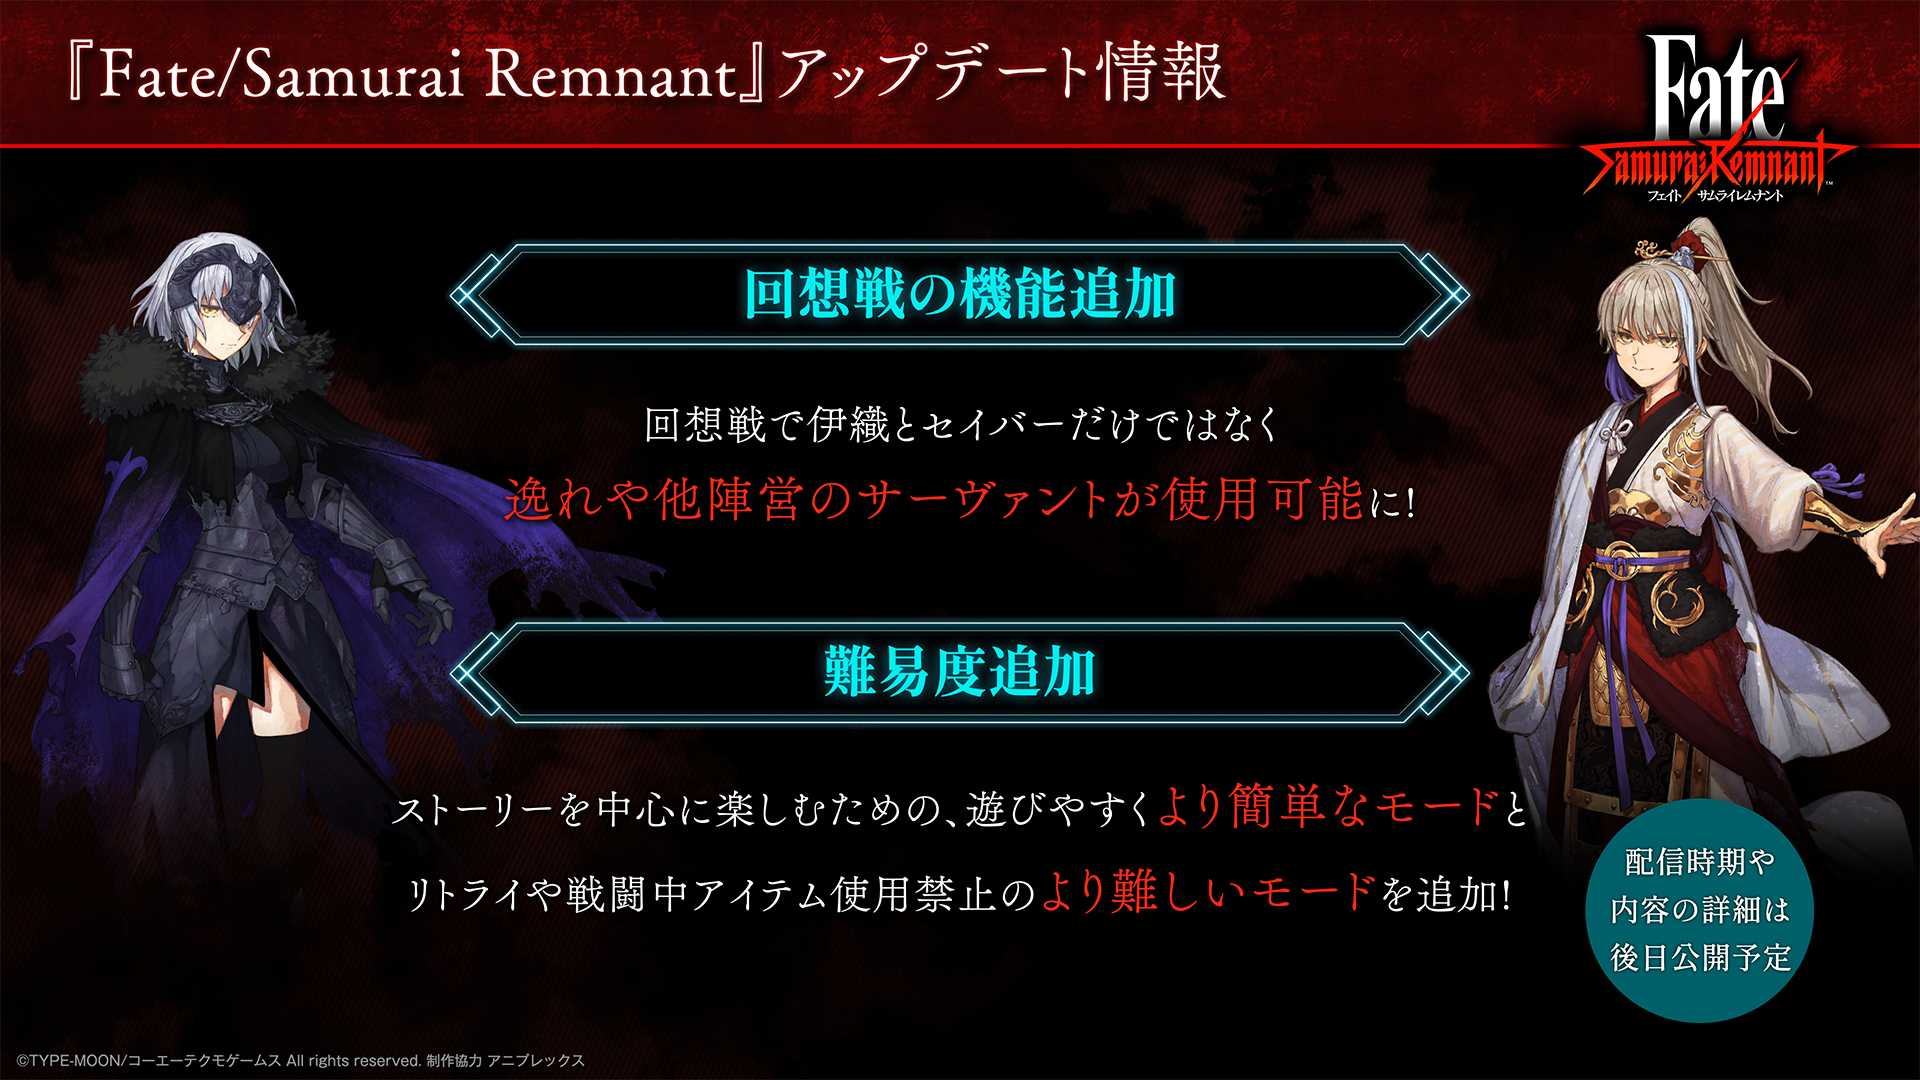 《Fate/Samurai Remnant》将加入更多难度选择及BOSS战模式(fatesamurairemnnant如何设置中文)